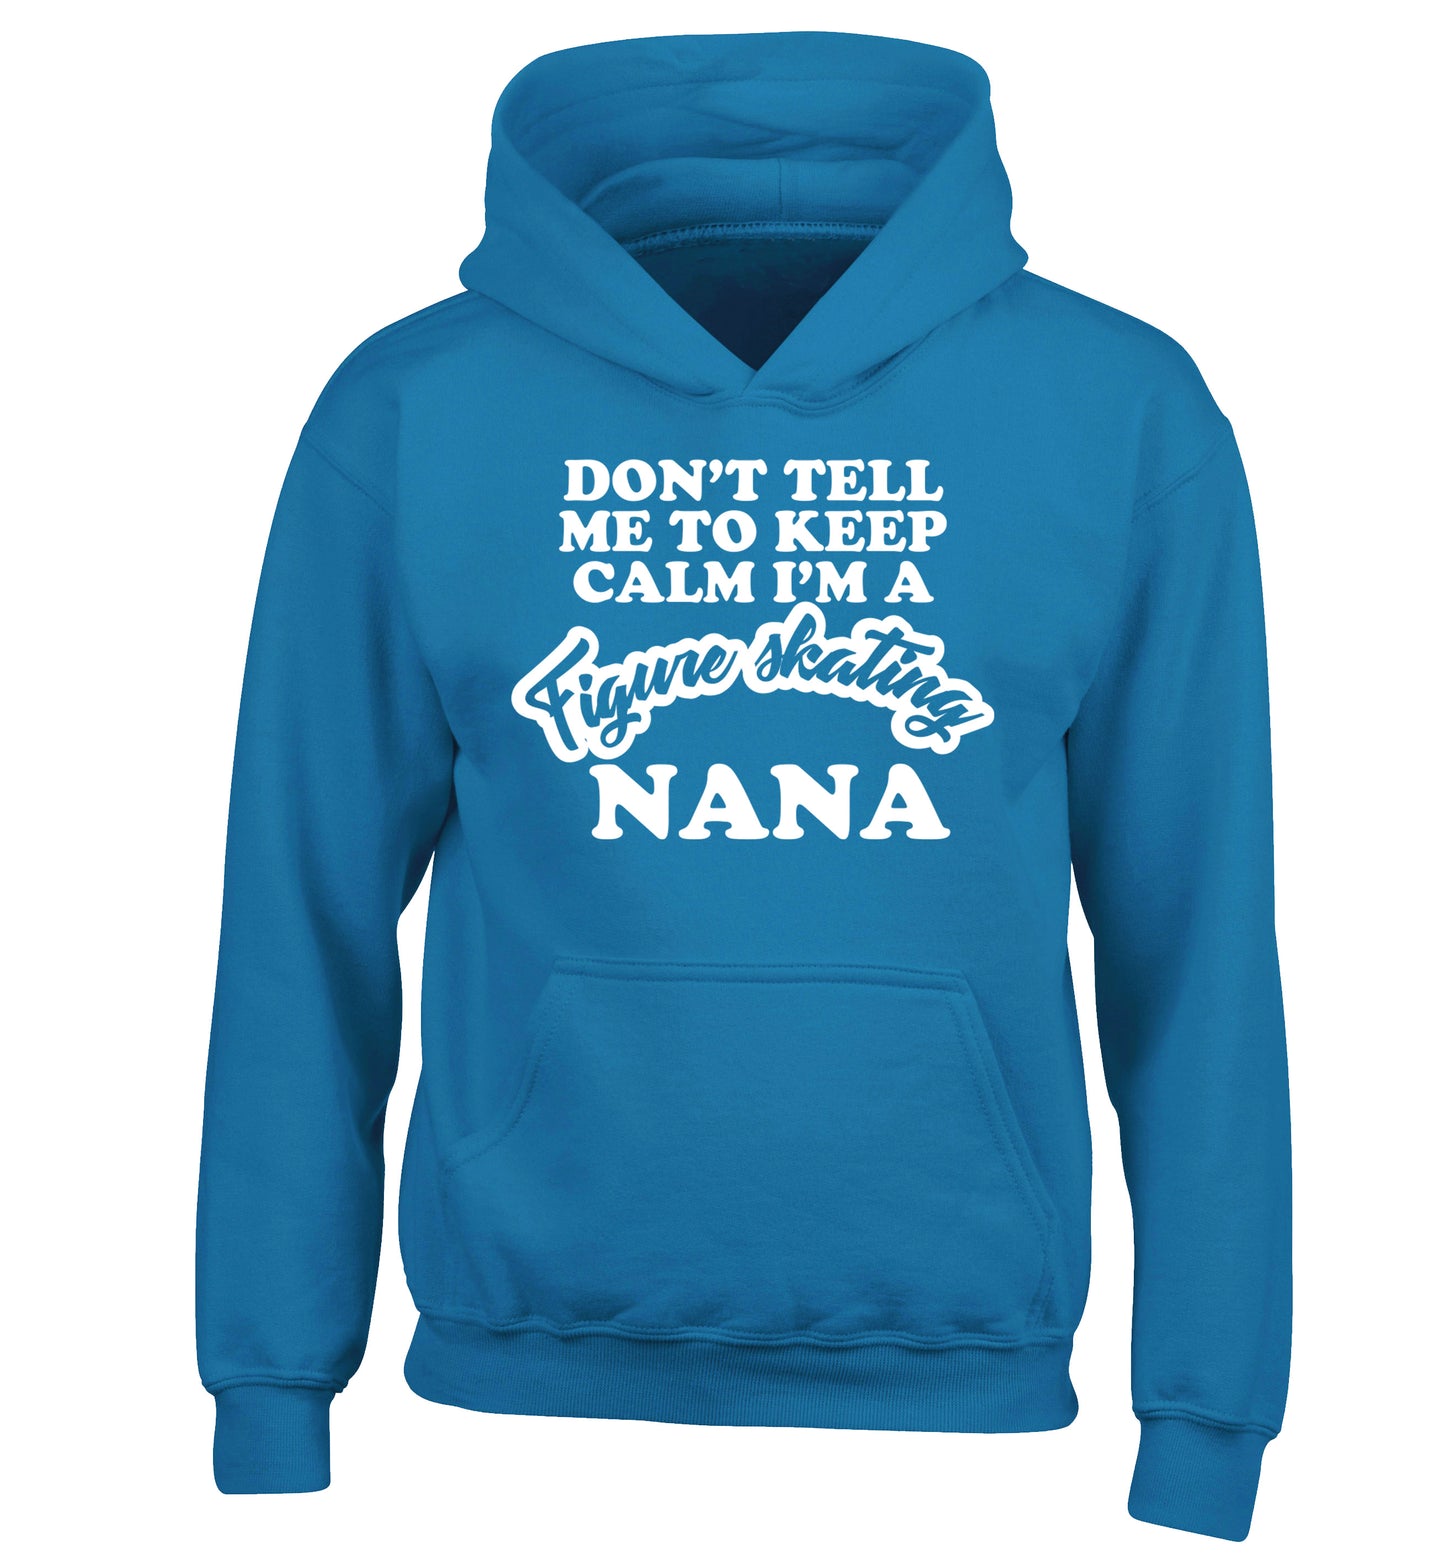 Don't tell me to keep calm I'm a figure skating nana children's blue hoodie 12-14 Years